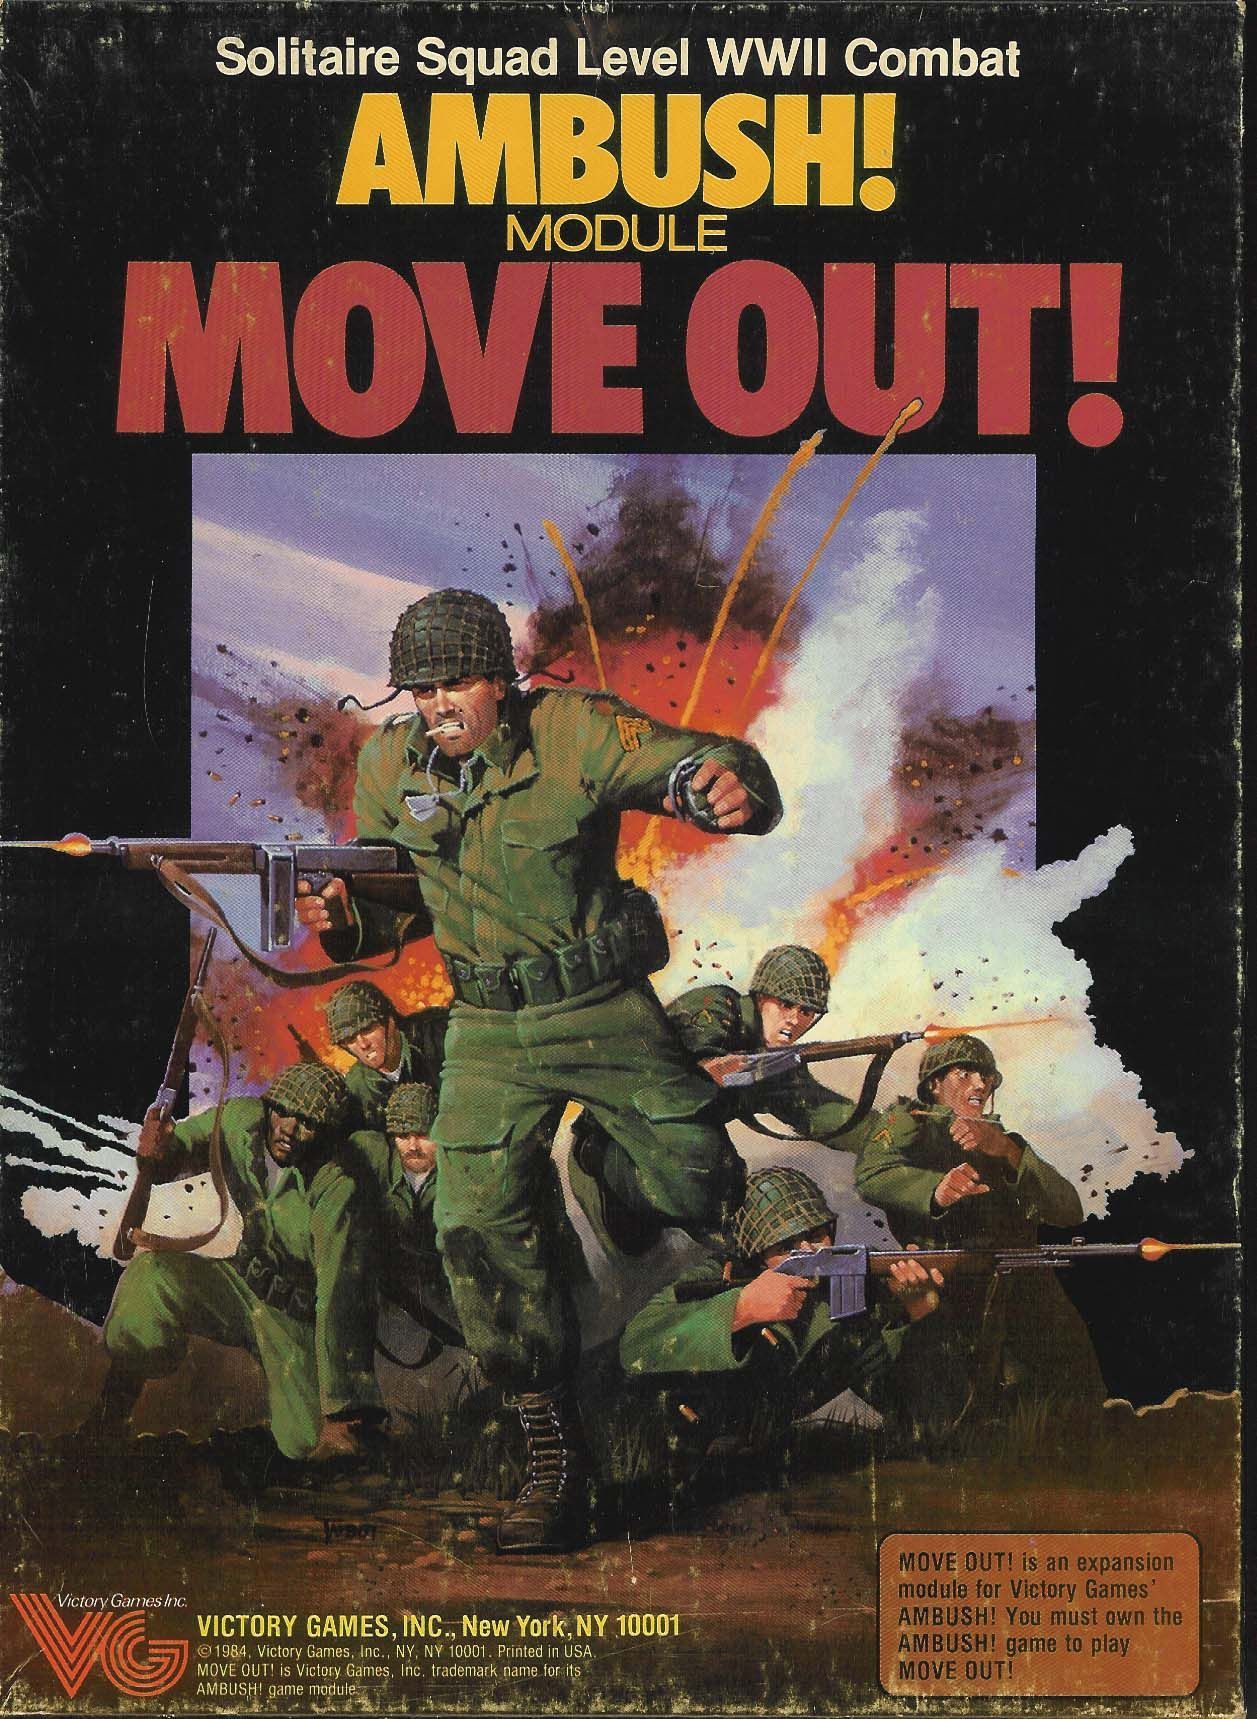 Ambush!: Move Out!